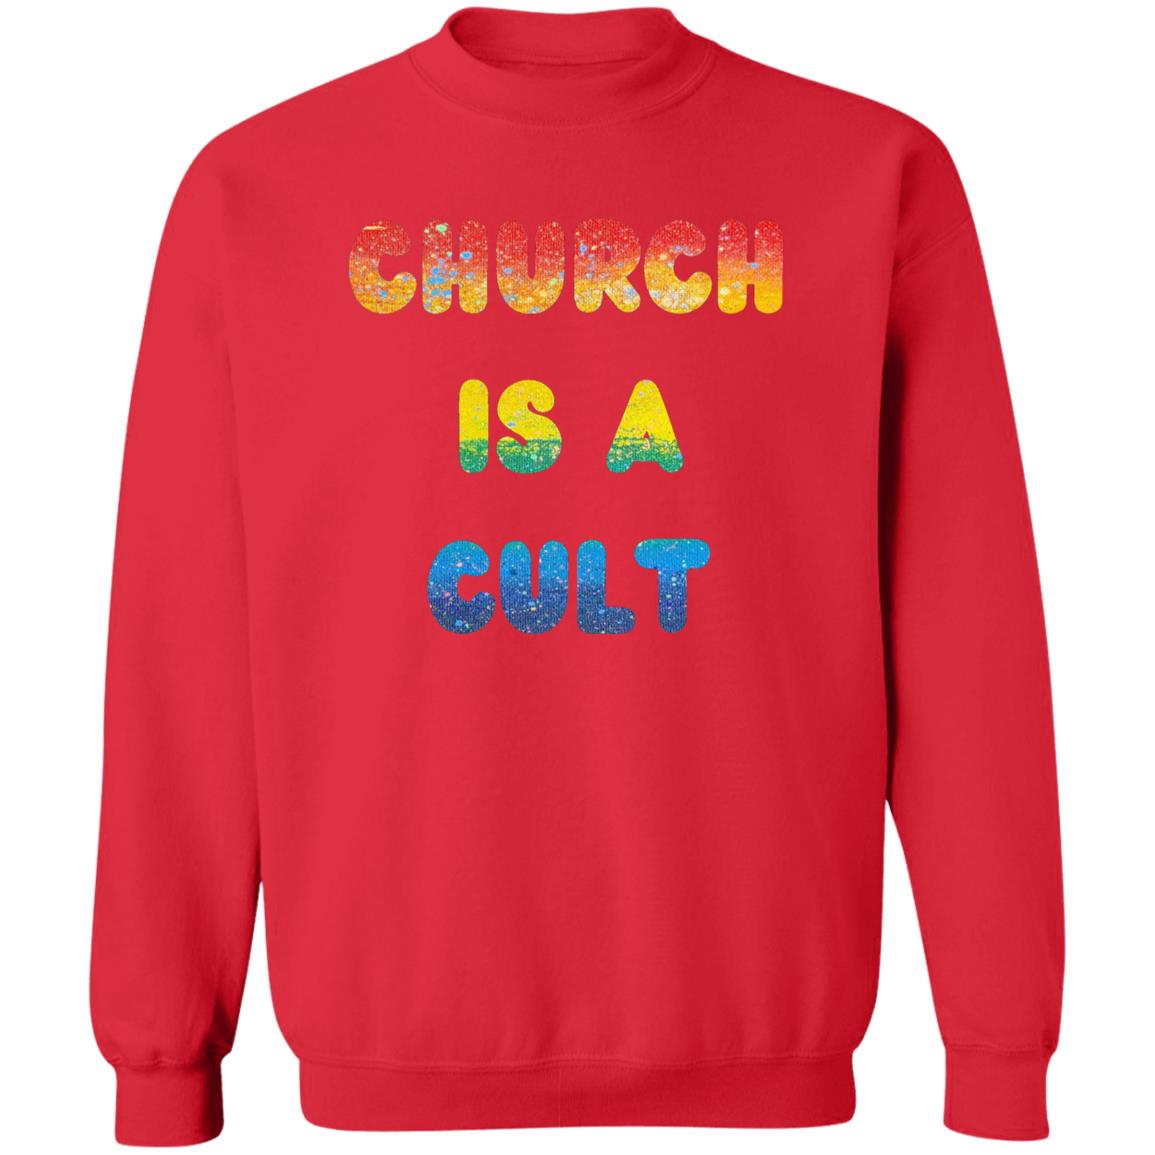 Gavin Scott PRIDE CHURCH IS A CULT Pullover Crewneck Sweatshirt (Masc S-3XL)